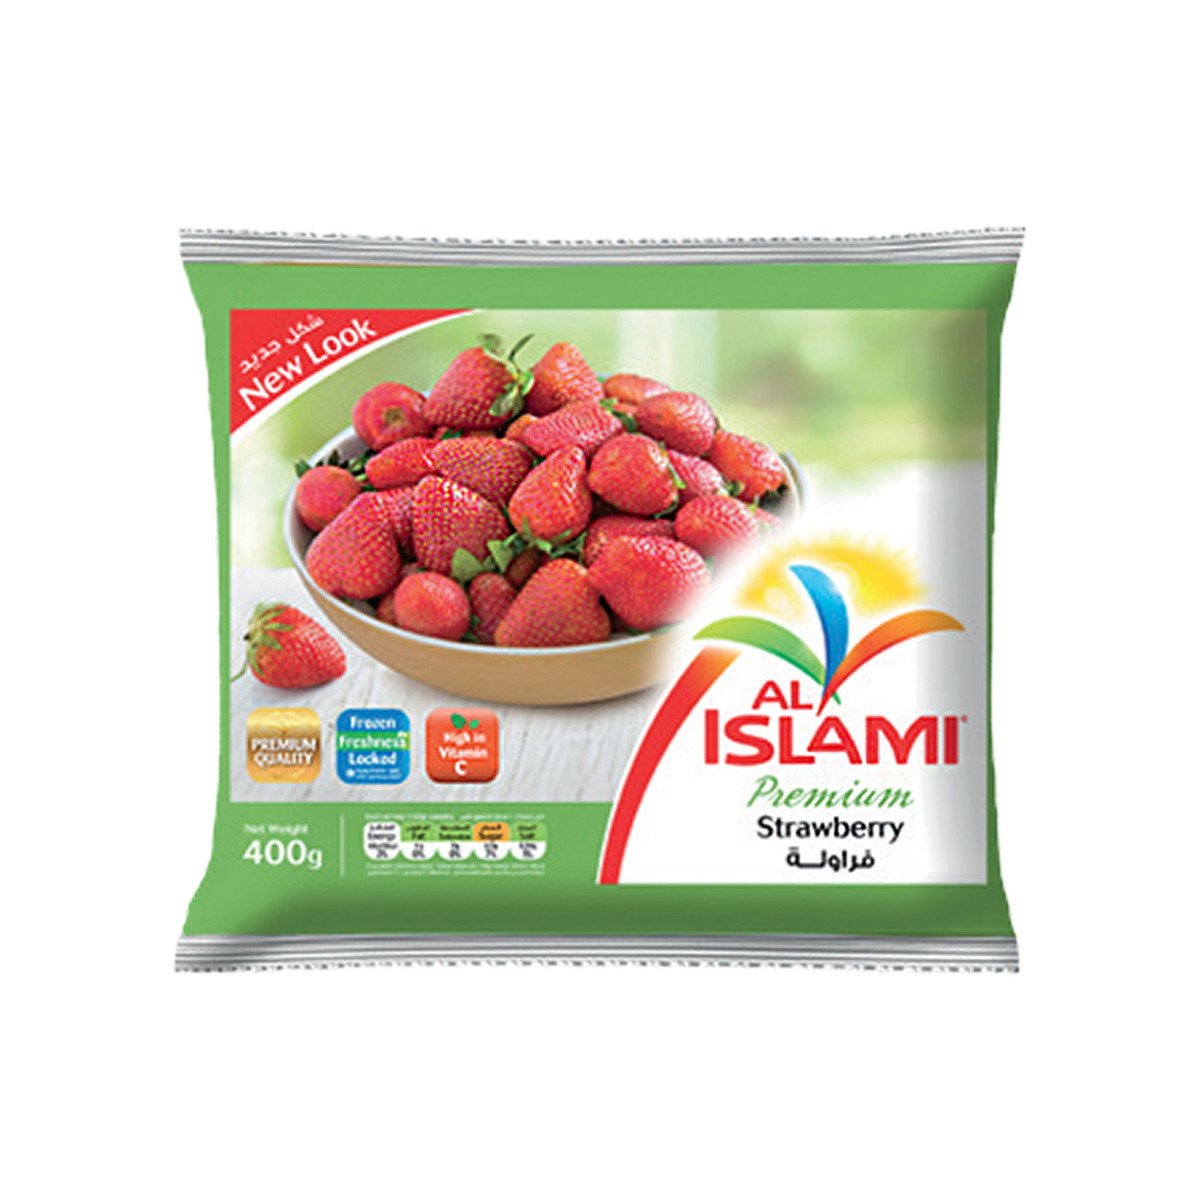 Al Islami Strawberry 3 x 400 g